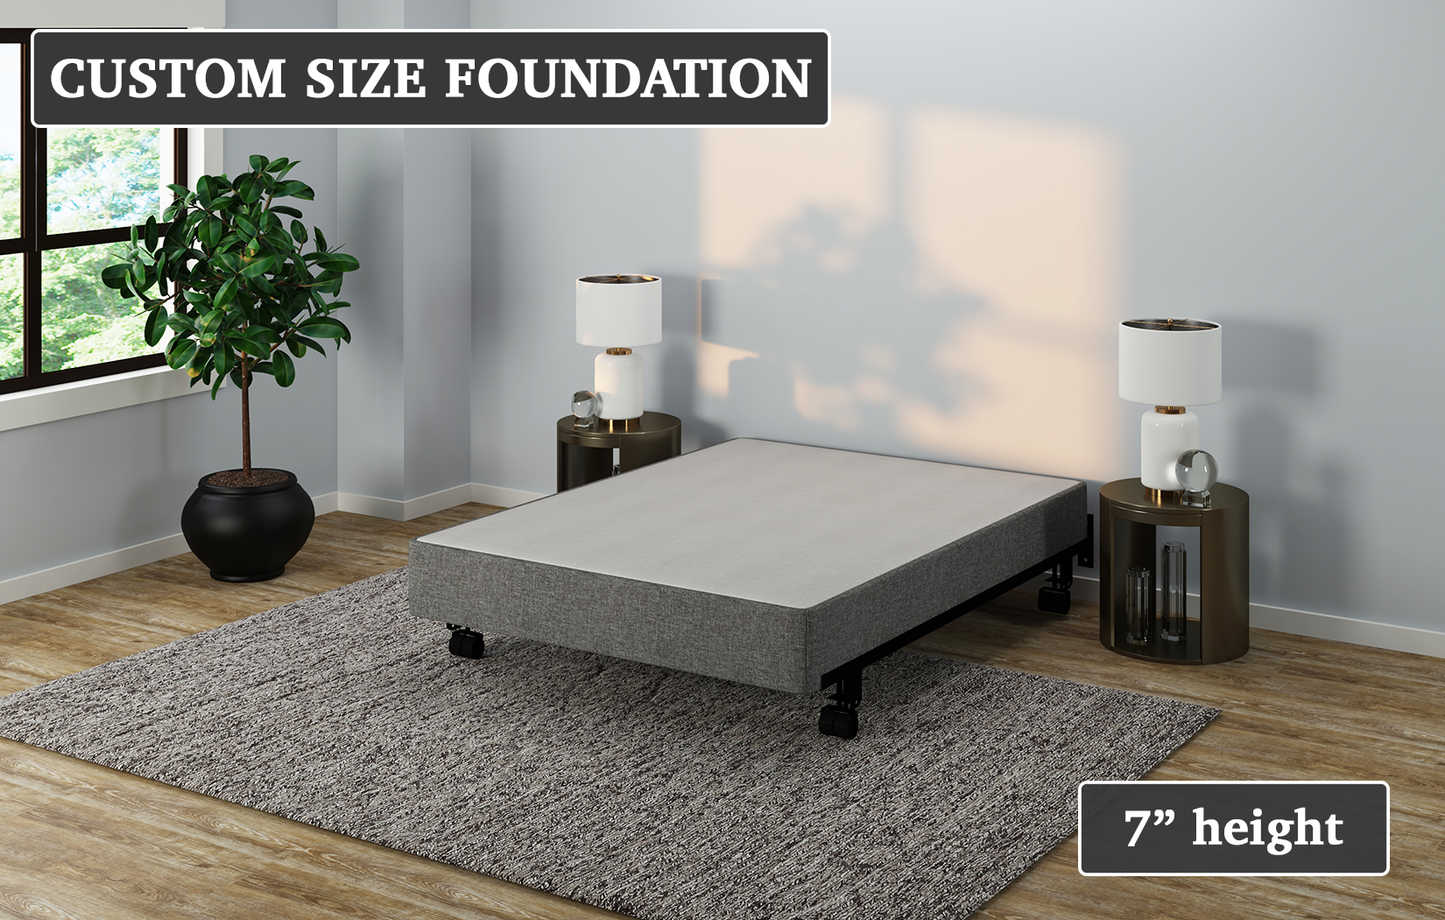 Custom Size Foundation - 31.5" x 78"